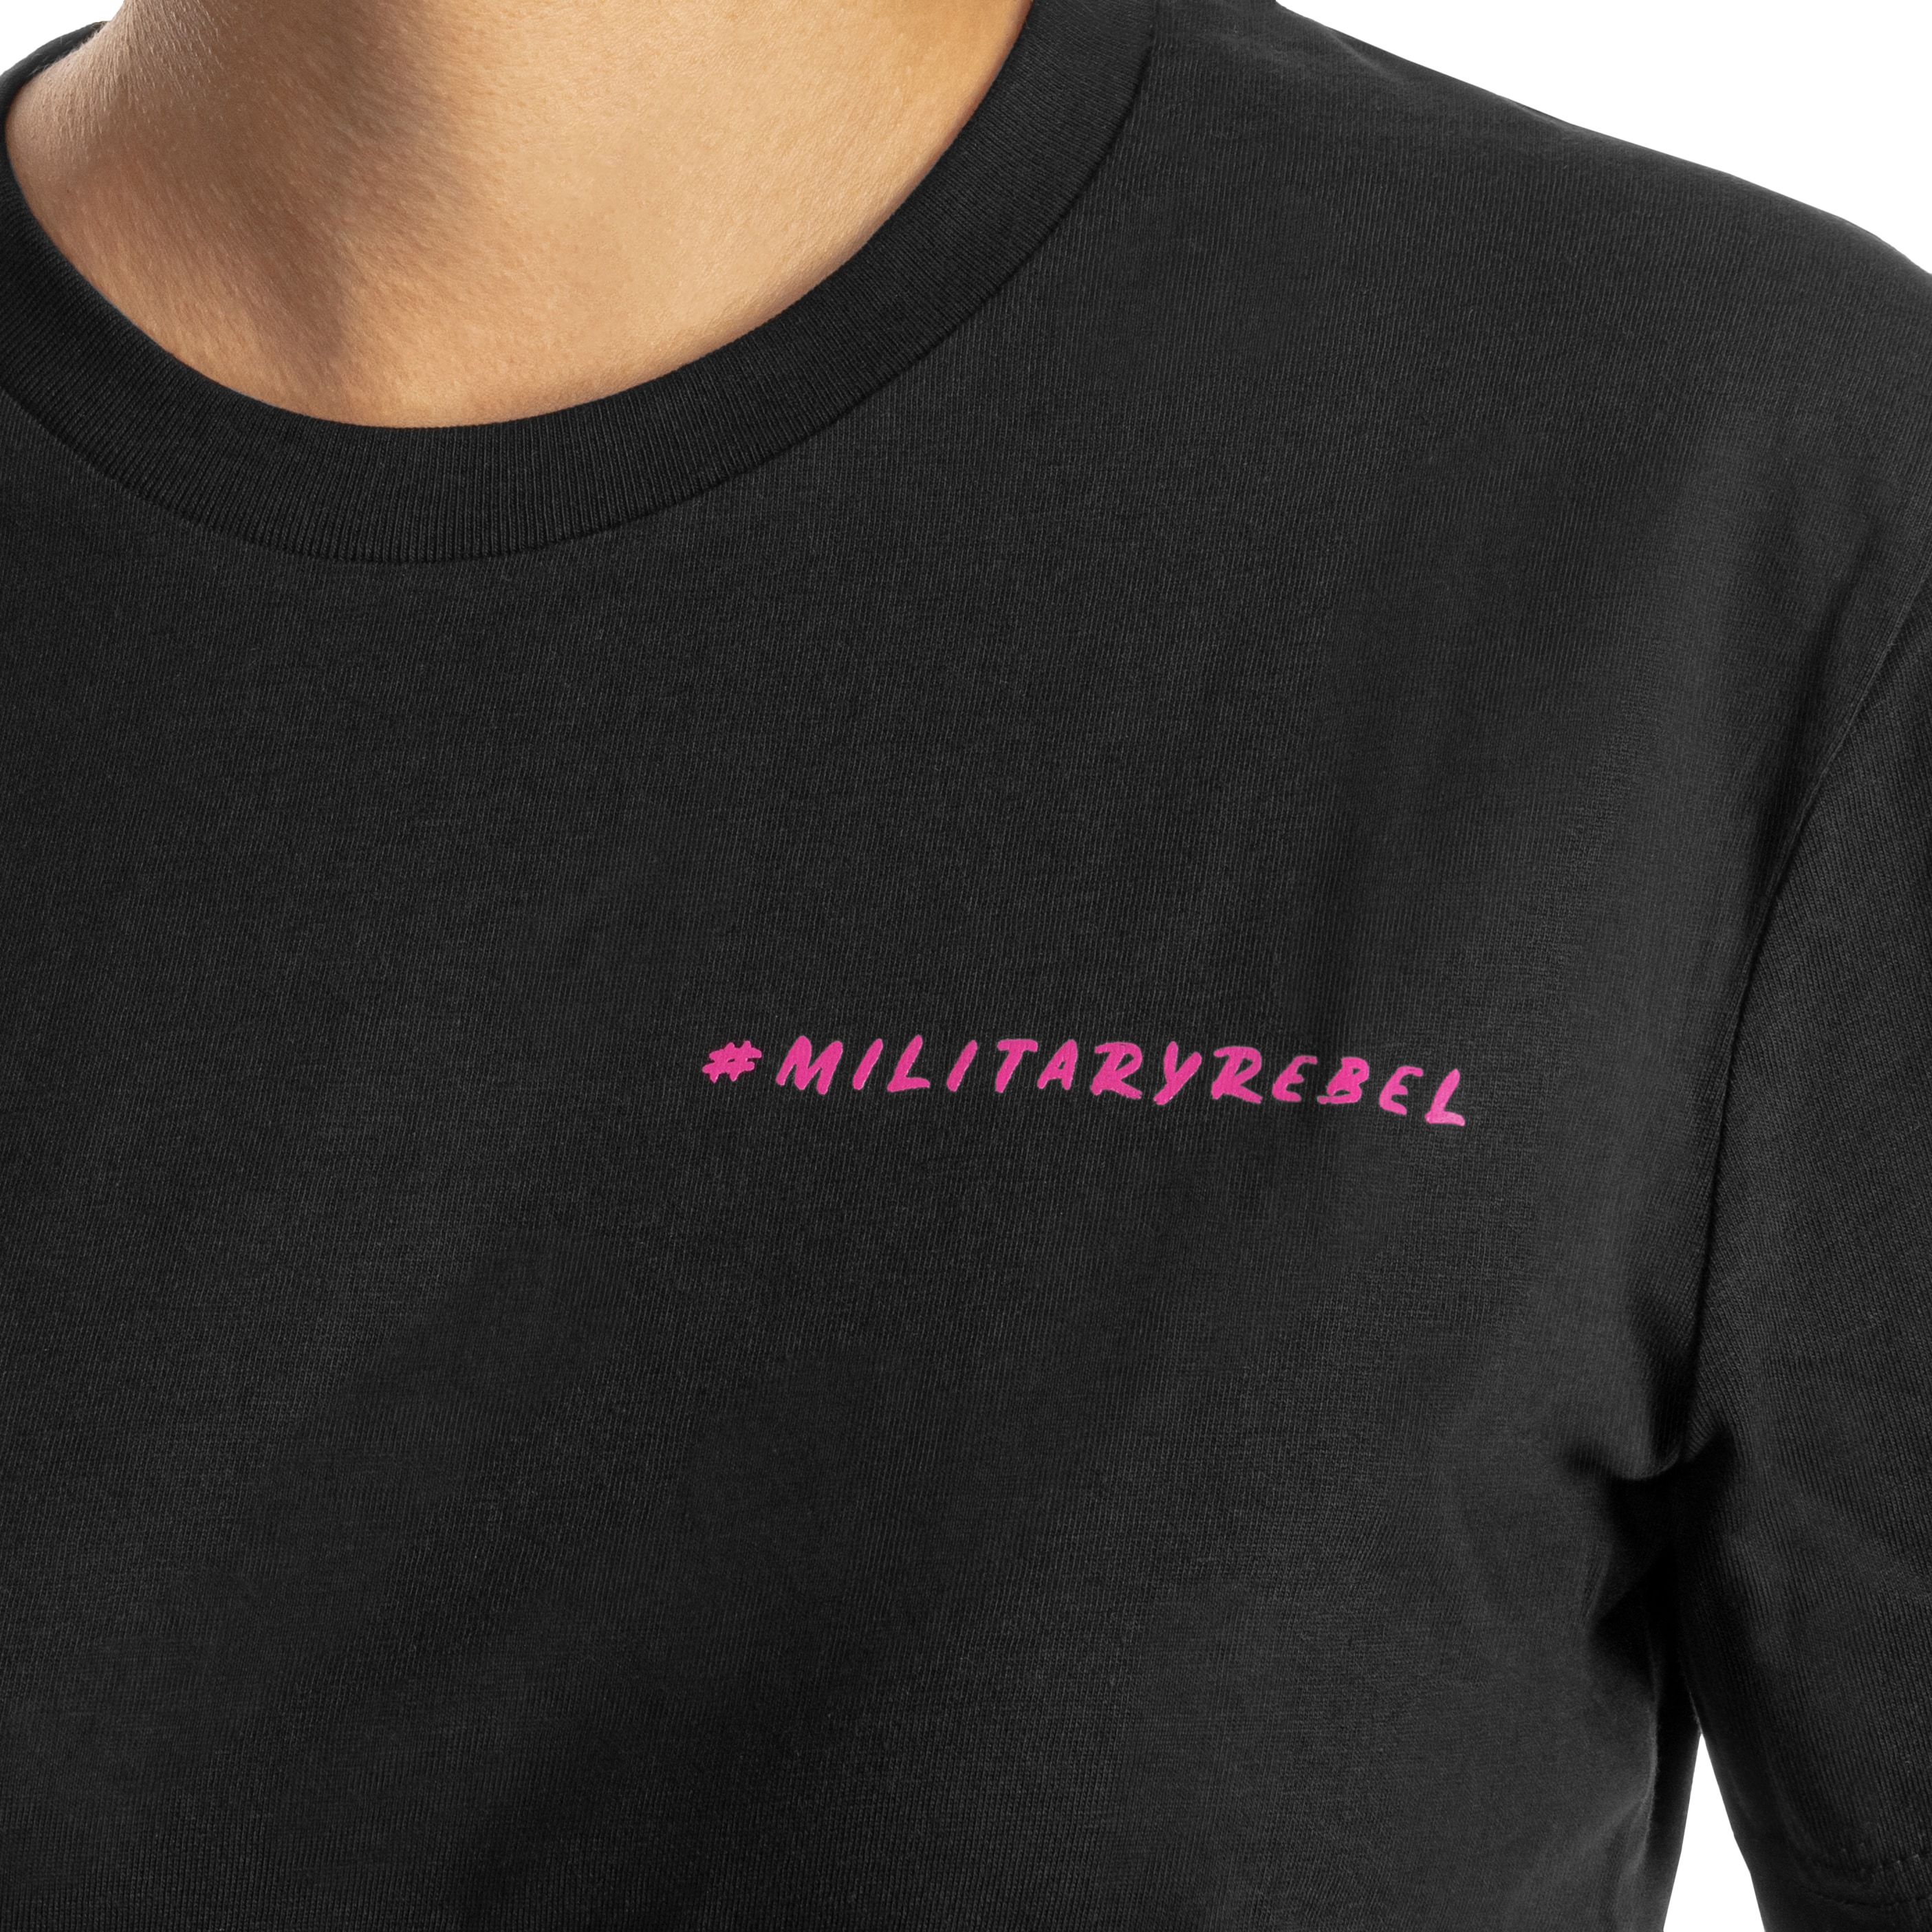 Футболка T-Shirt жіноча Military Gym Wear #MilitaryRebel - Чорна